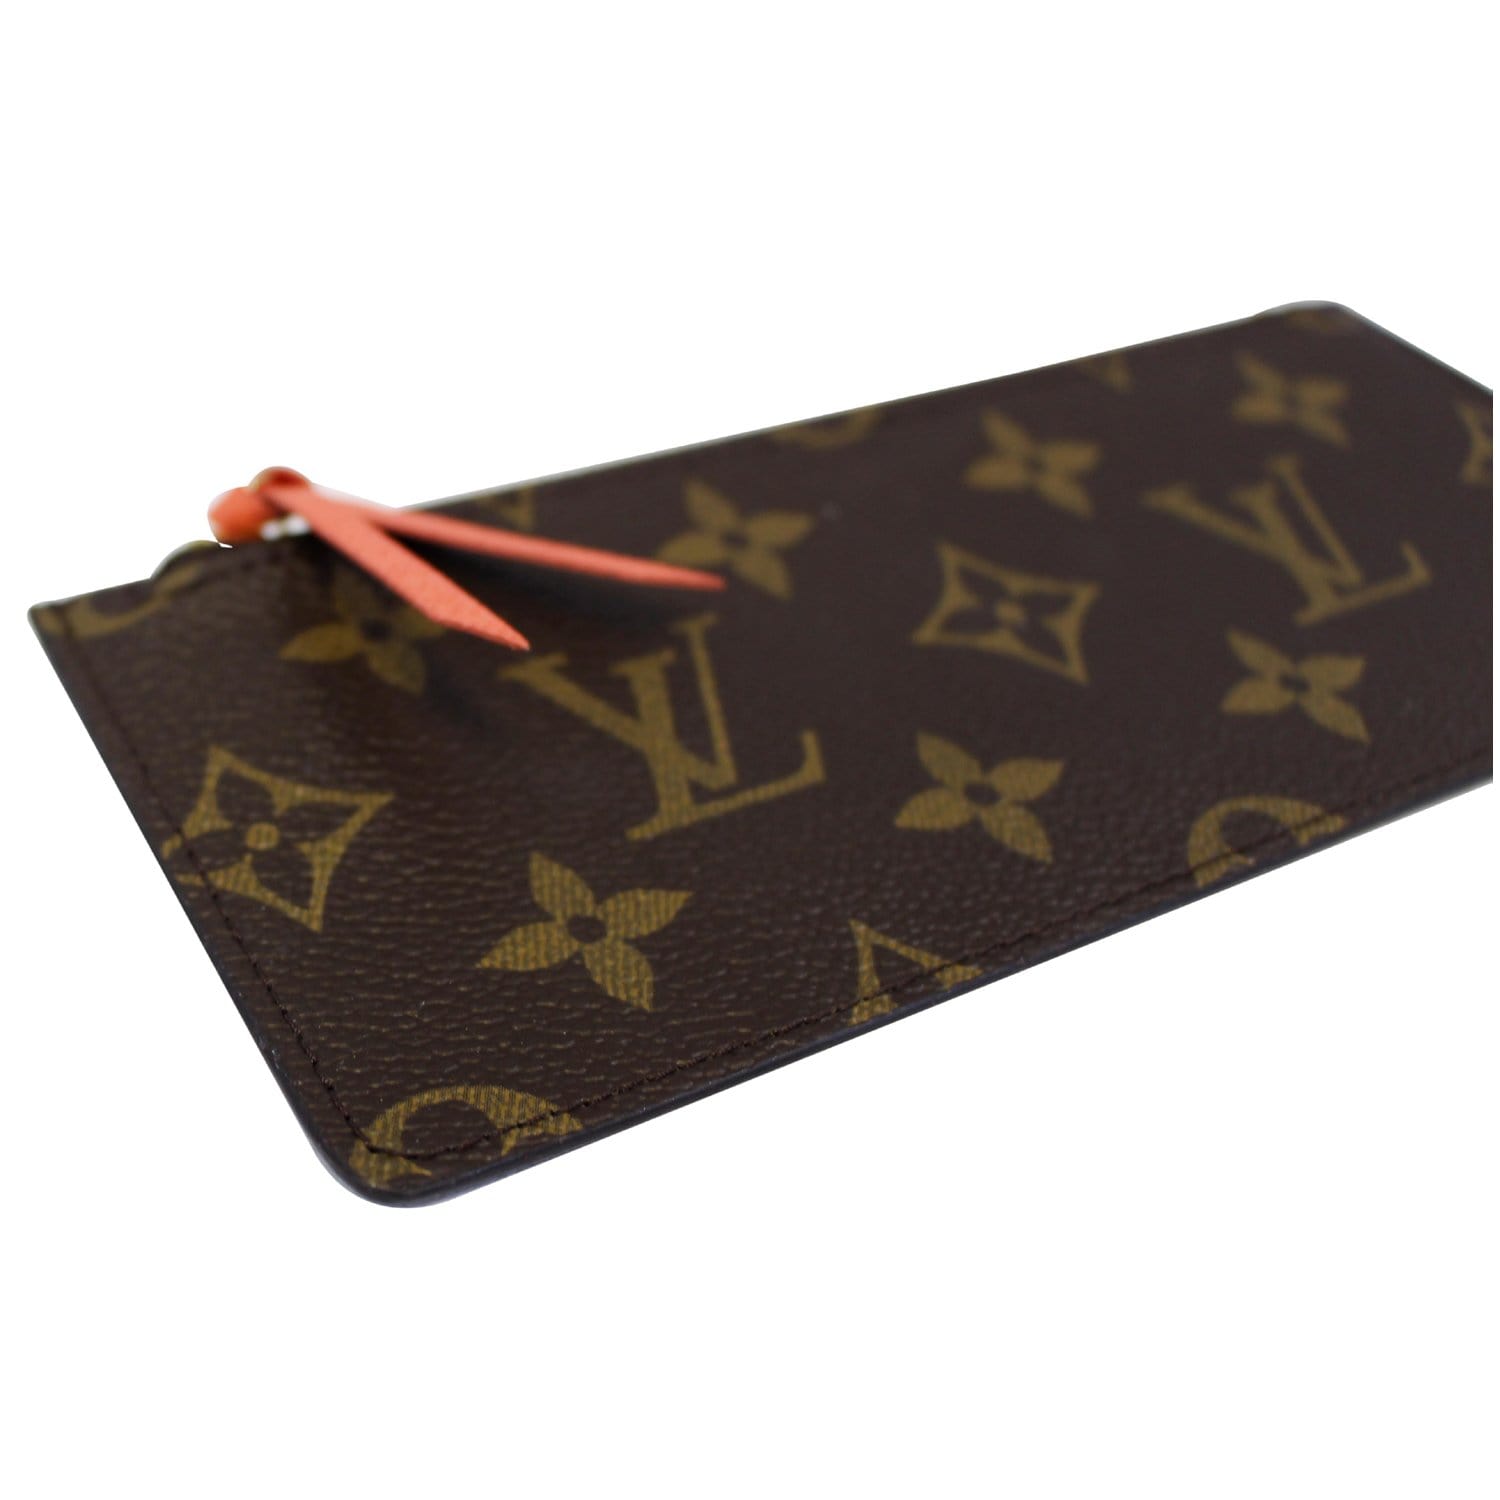 DIY Louis Vuitton pouch! (3 ways, 1 pouch), Galeri disiarkan oleh Felicia✨